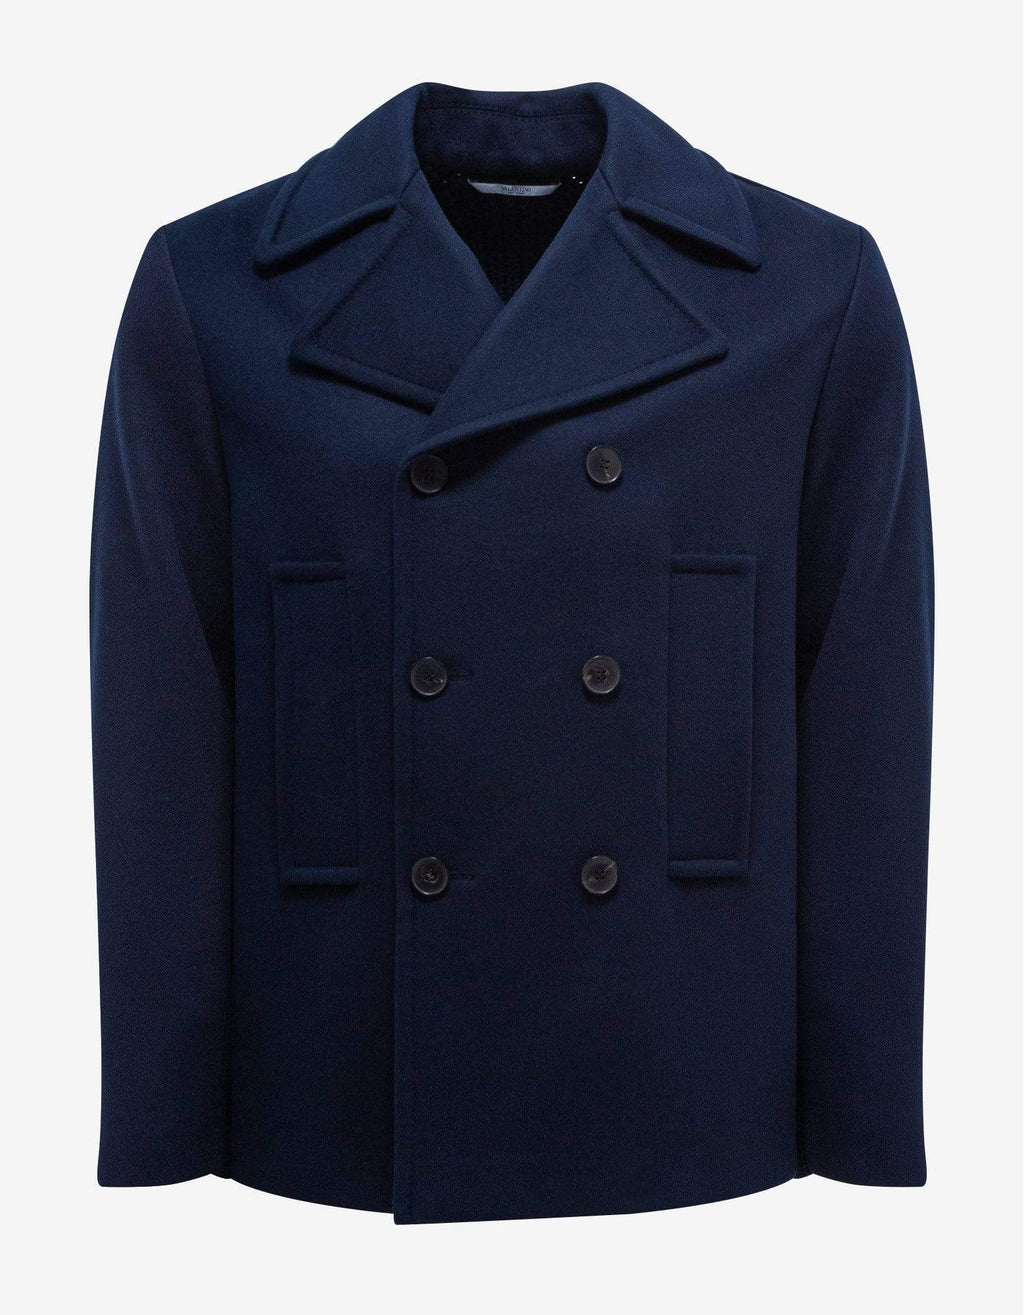 Valentino Valentino Navy Blue Double-Breasted Wool Jacket